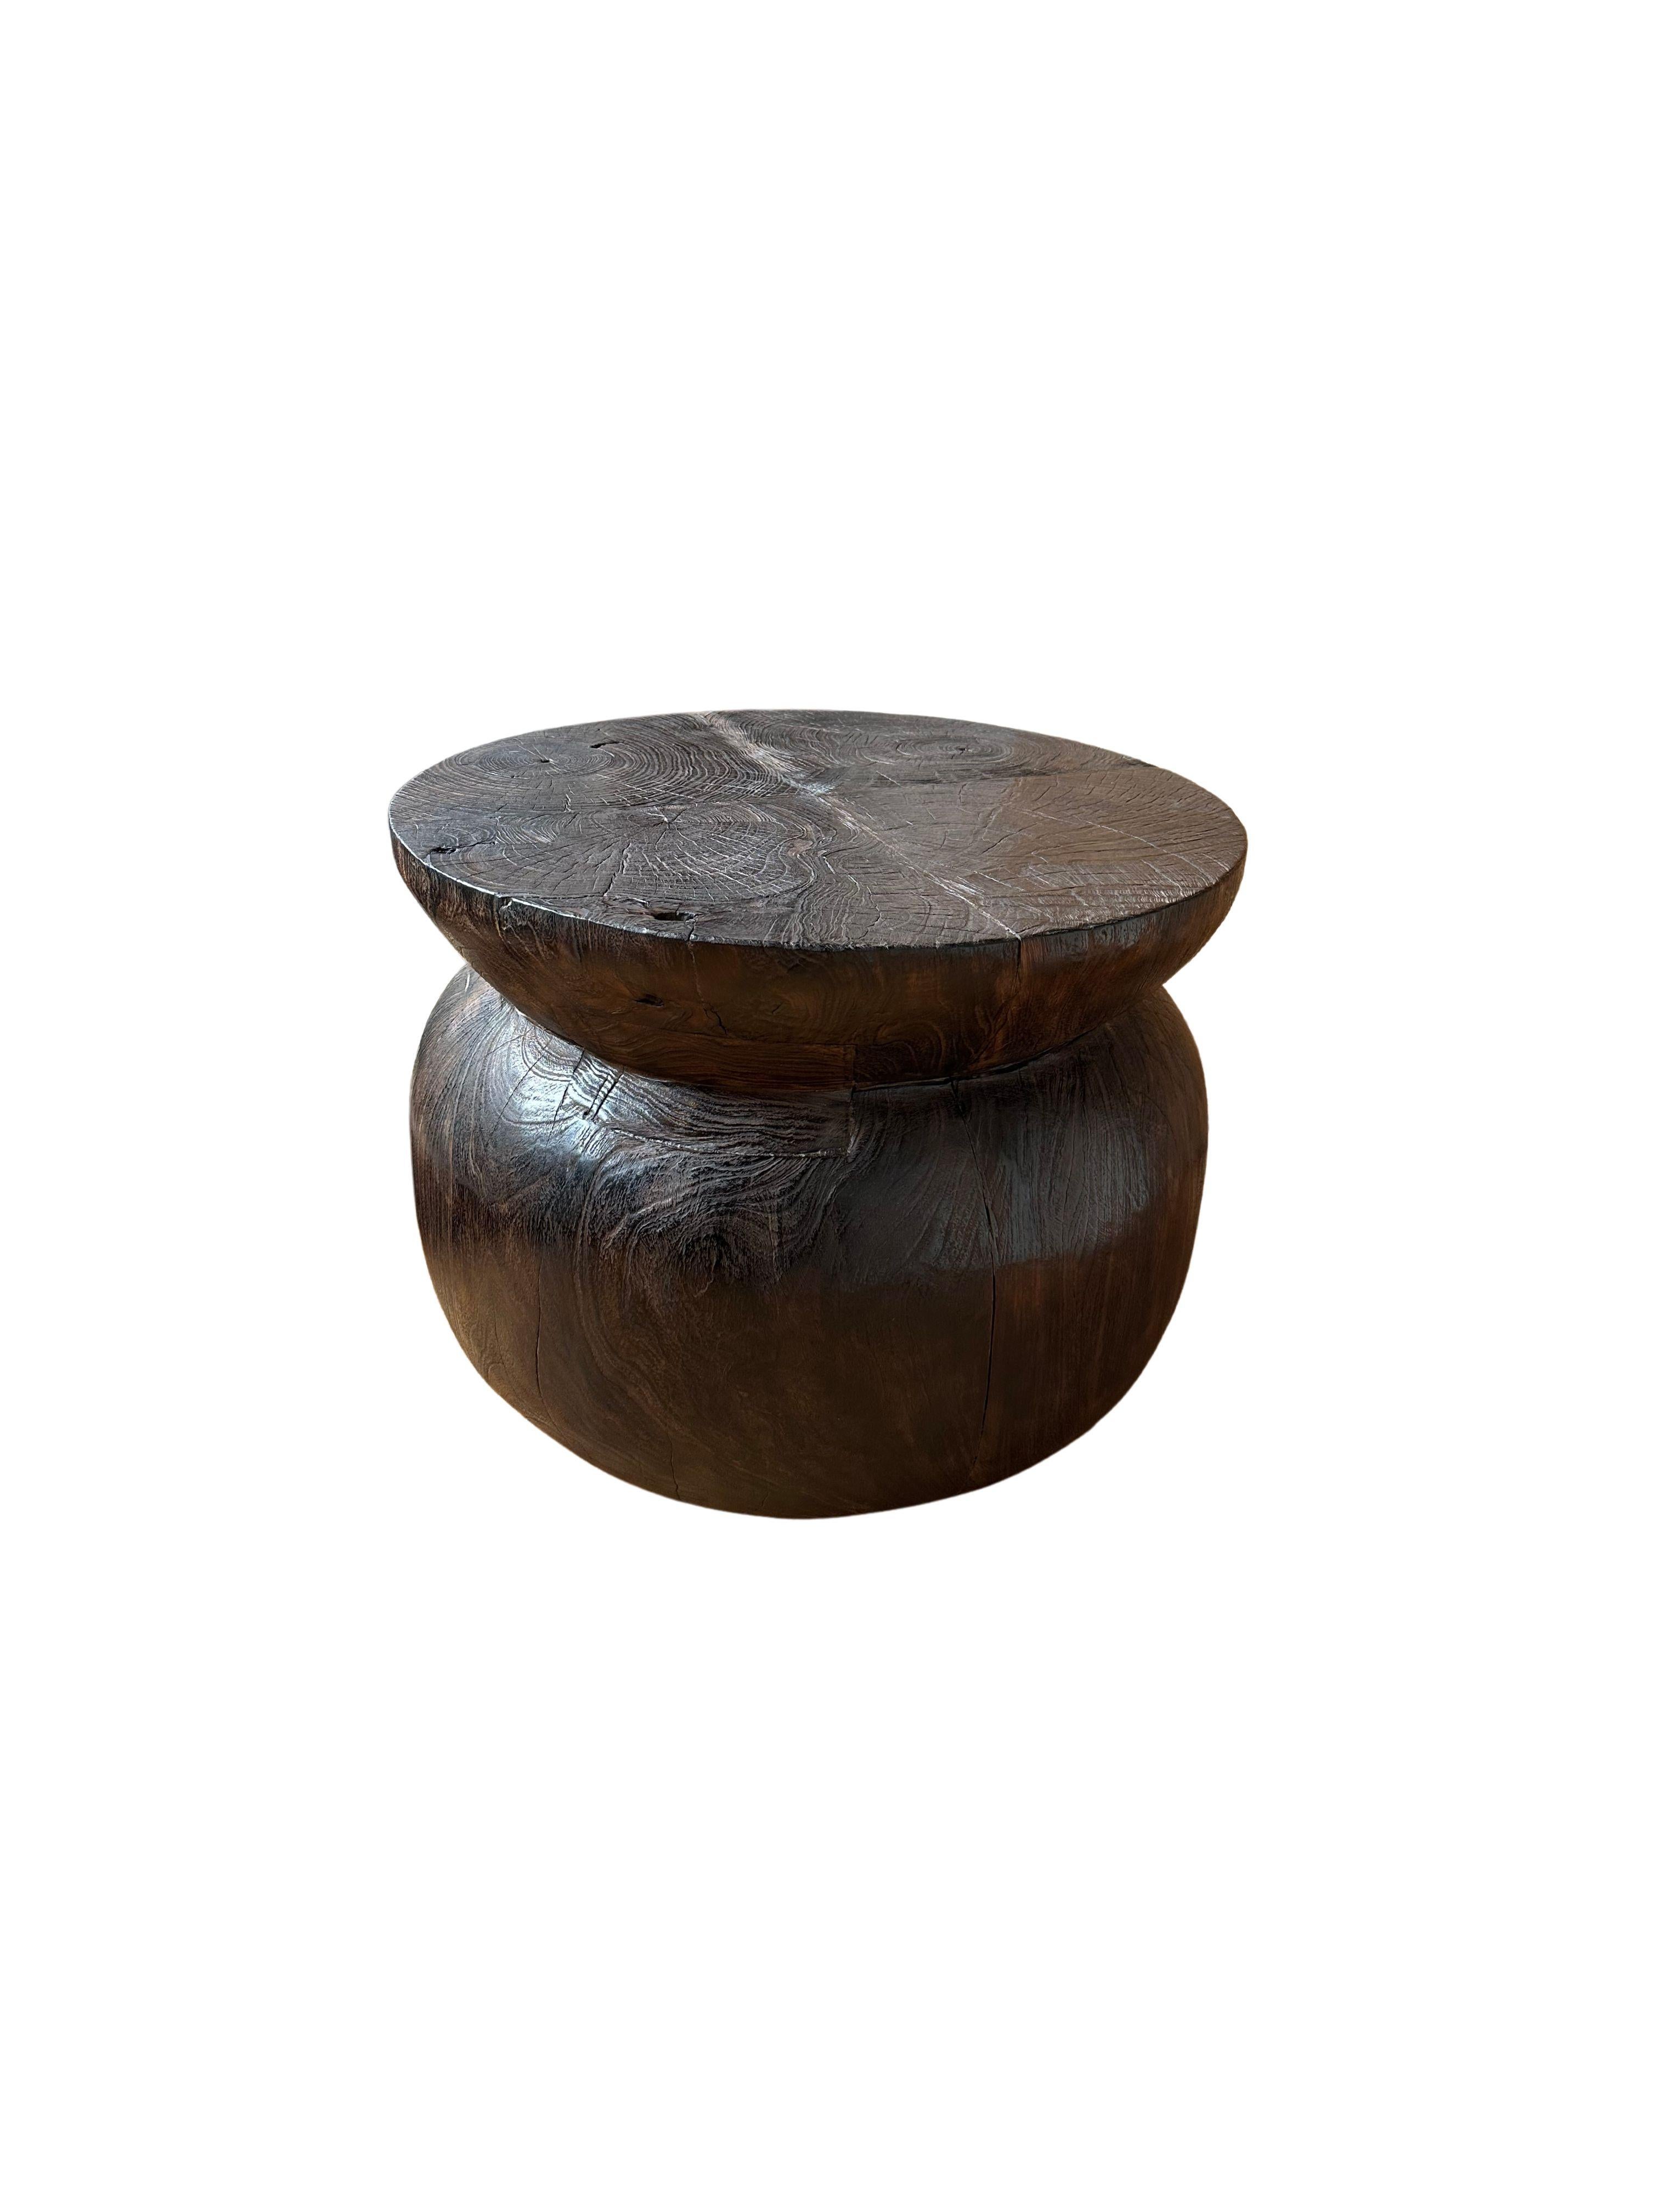 Indonesian Sculptural Round Teak Wood Side Table, Burnt Finish, Modern Organic For Sale